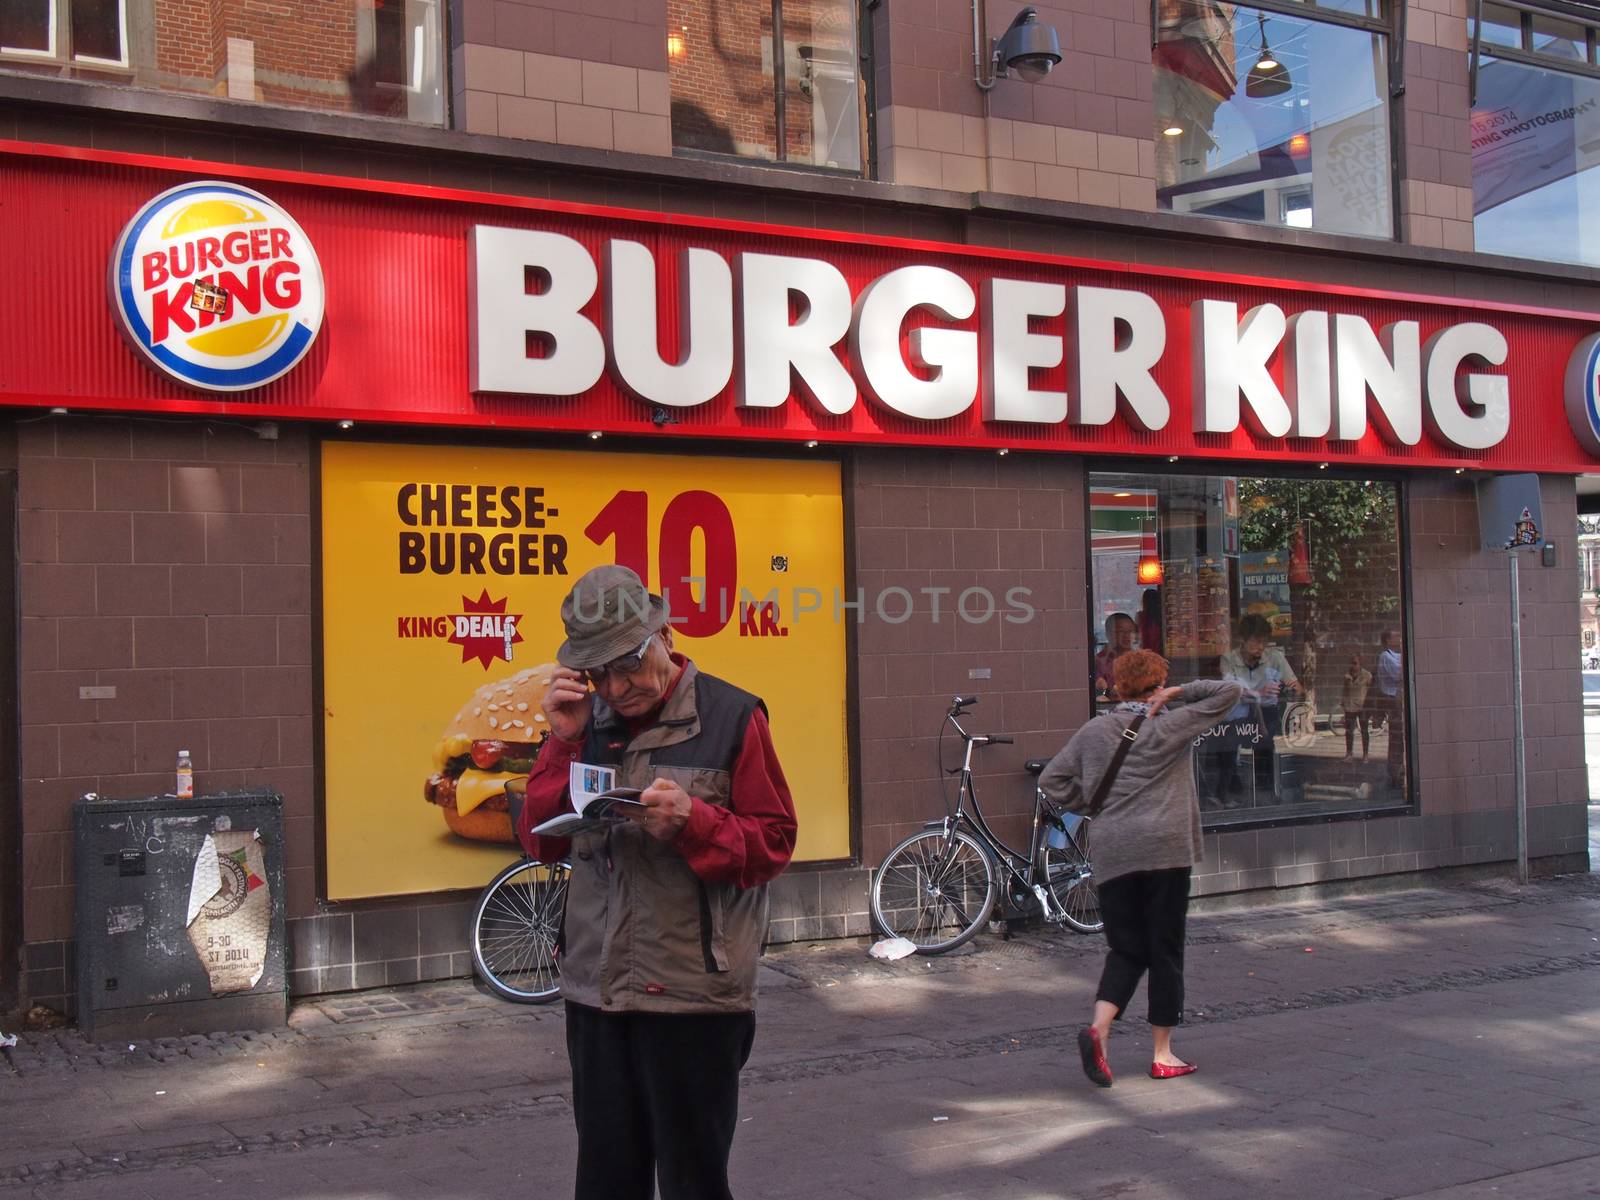 burger king store front in copenhagen denmark